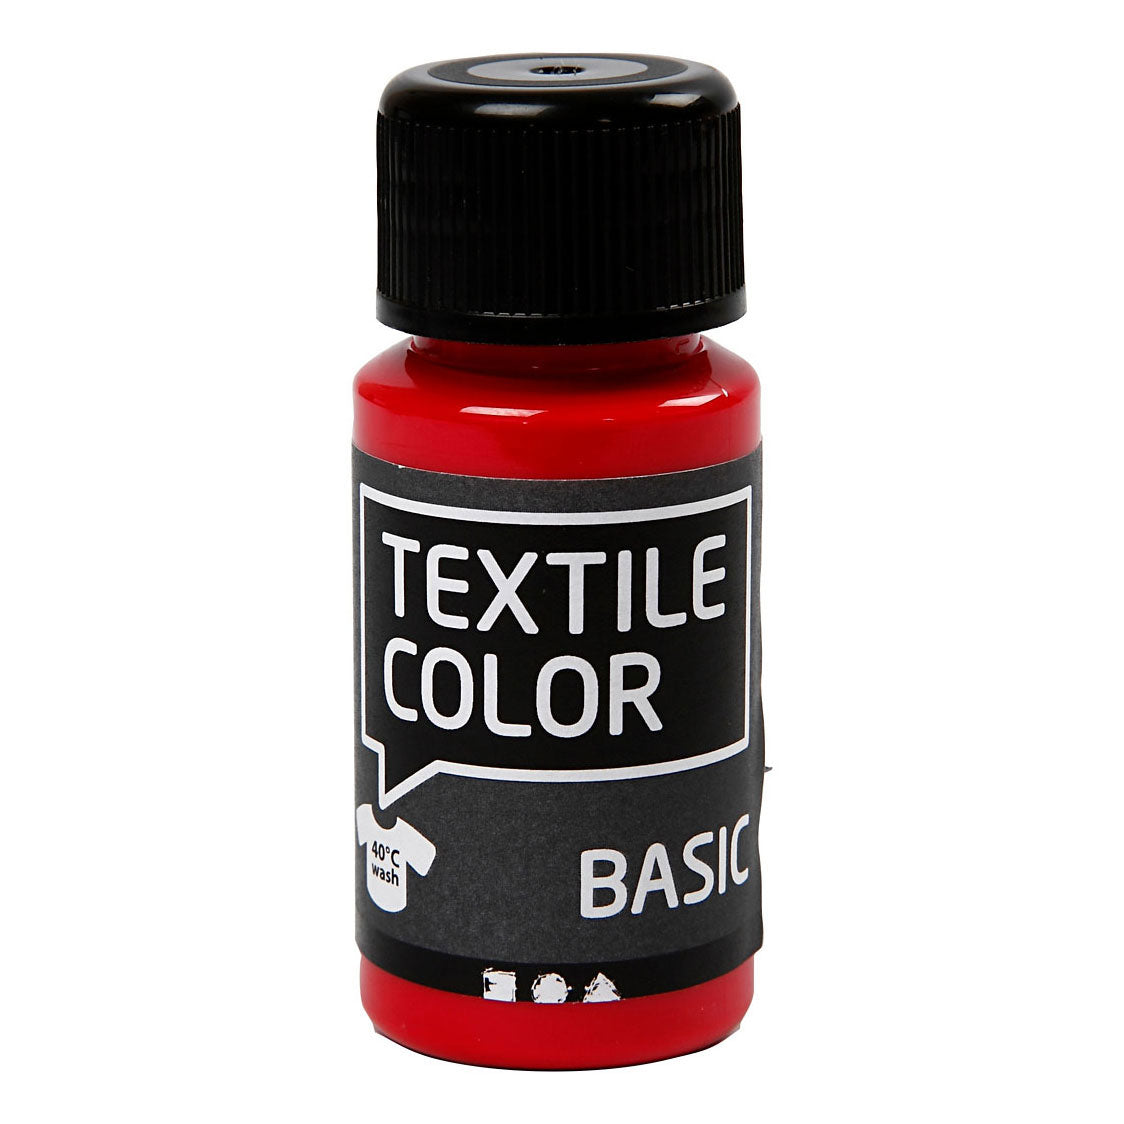 Creativ Company Textile Color Semi-dekkende Textielverf Primair Rood, 50ml